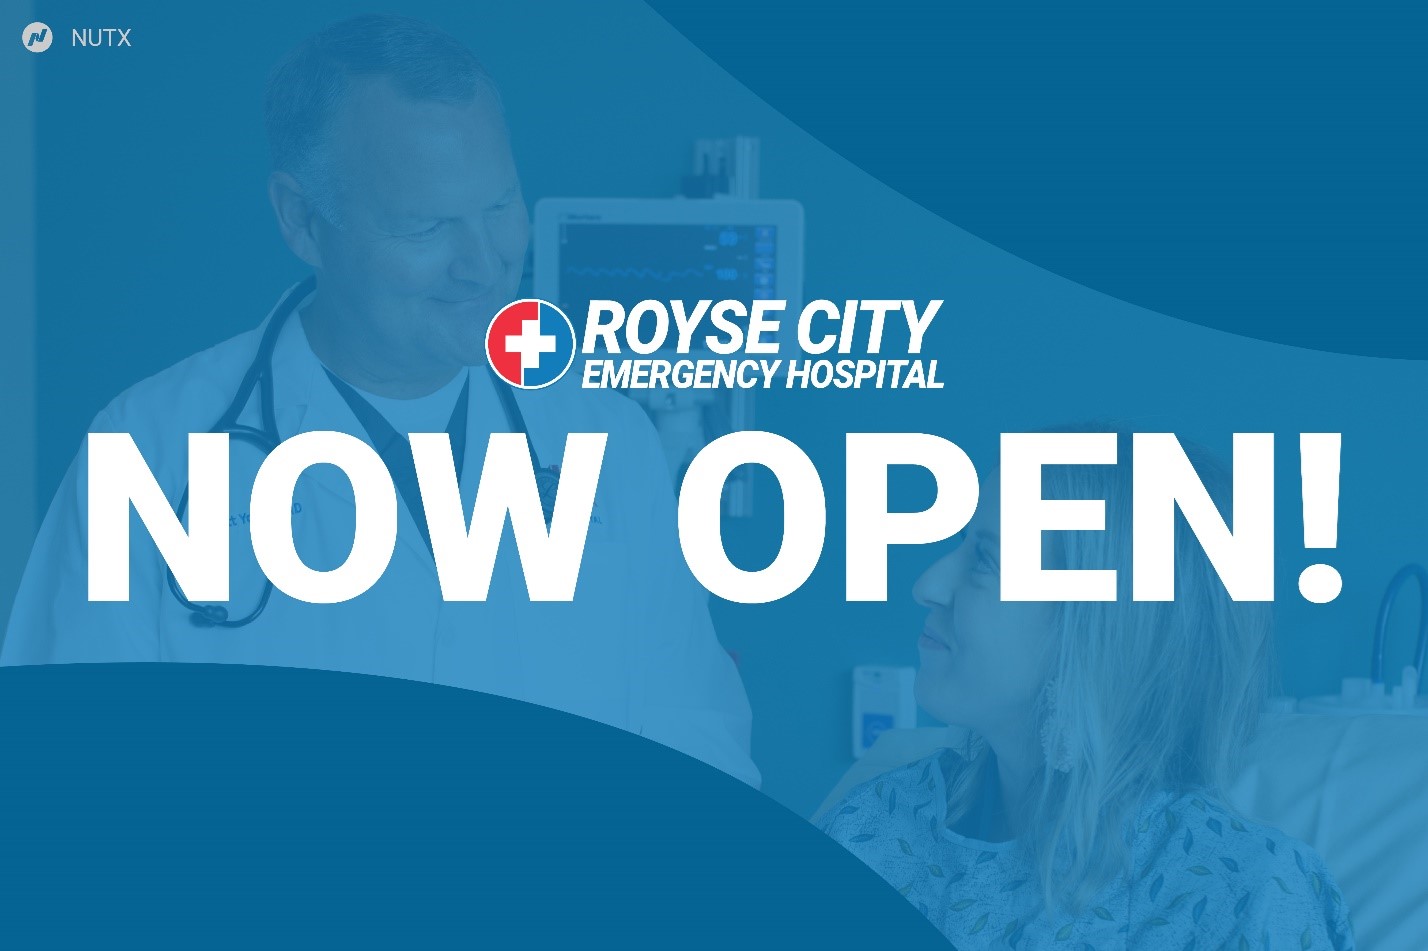 Royse City Emergency Hospital Now Open